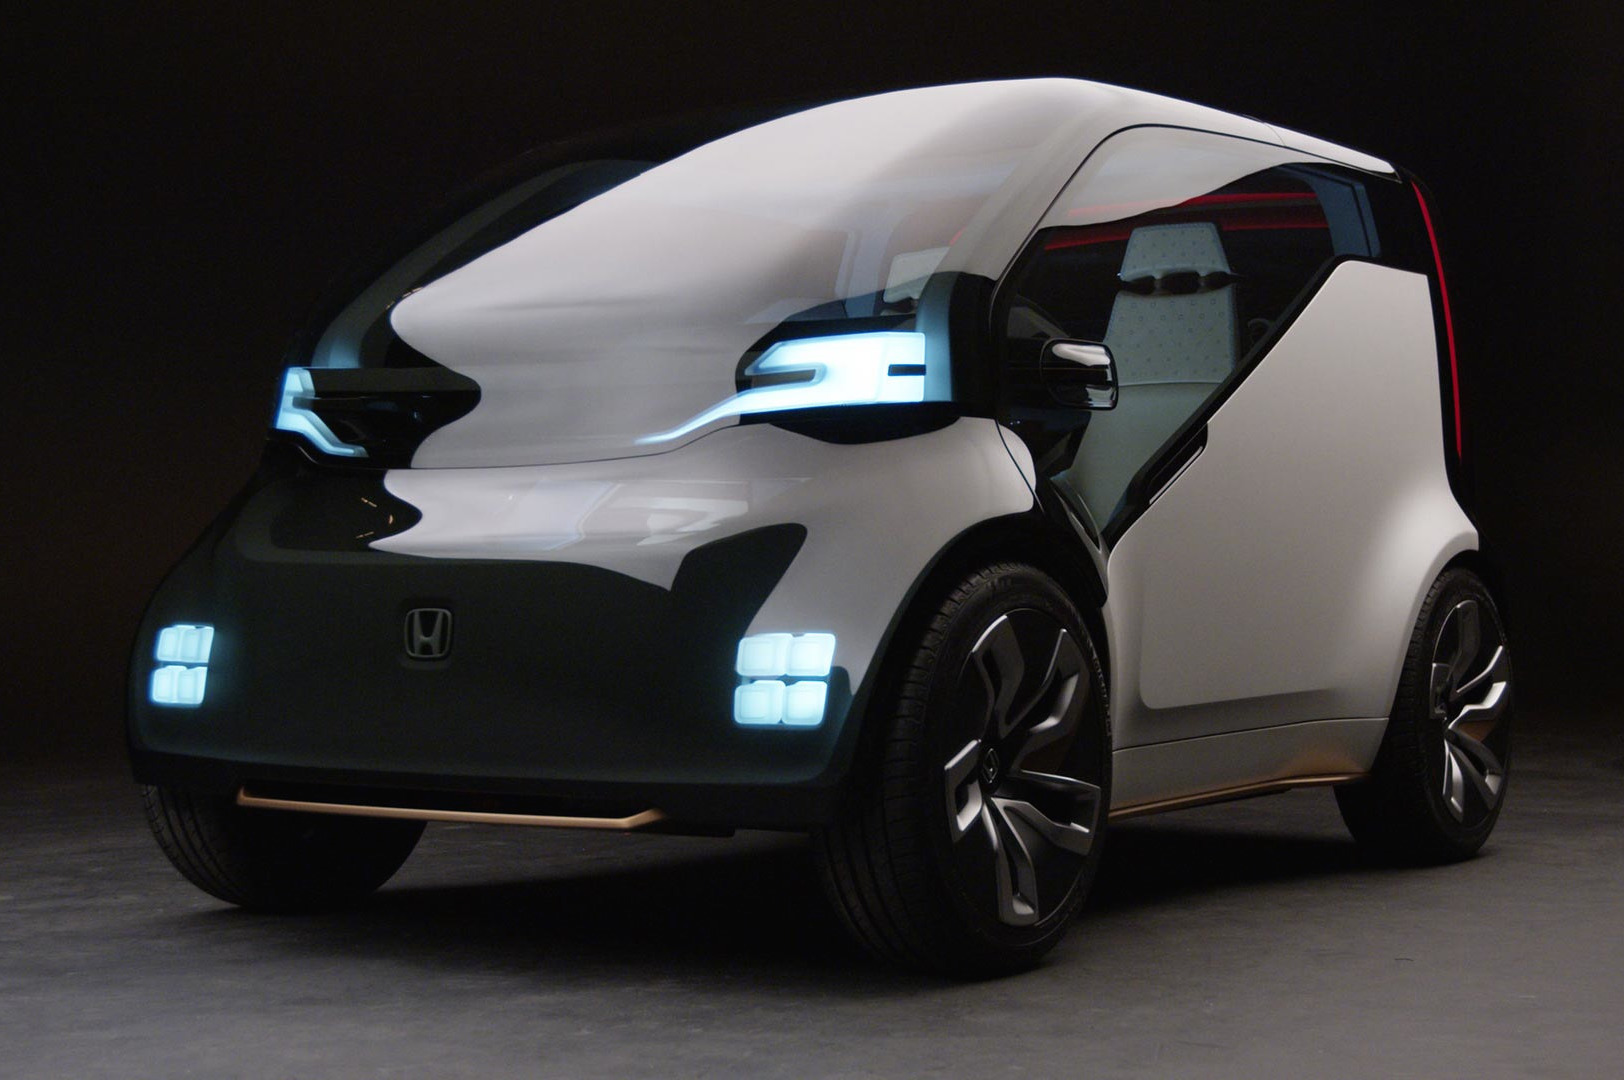 Honda NeuV concept revealed at 2017 CES